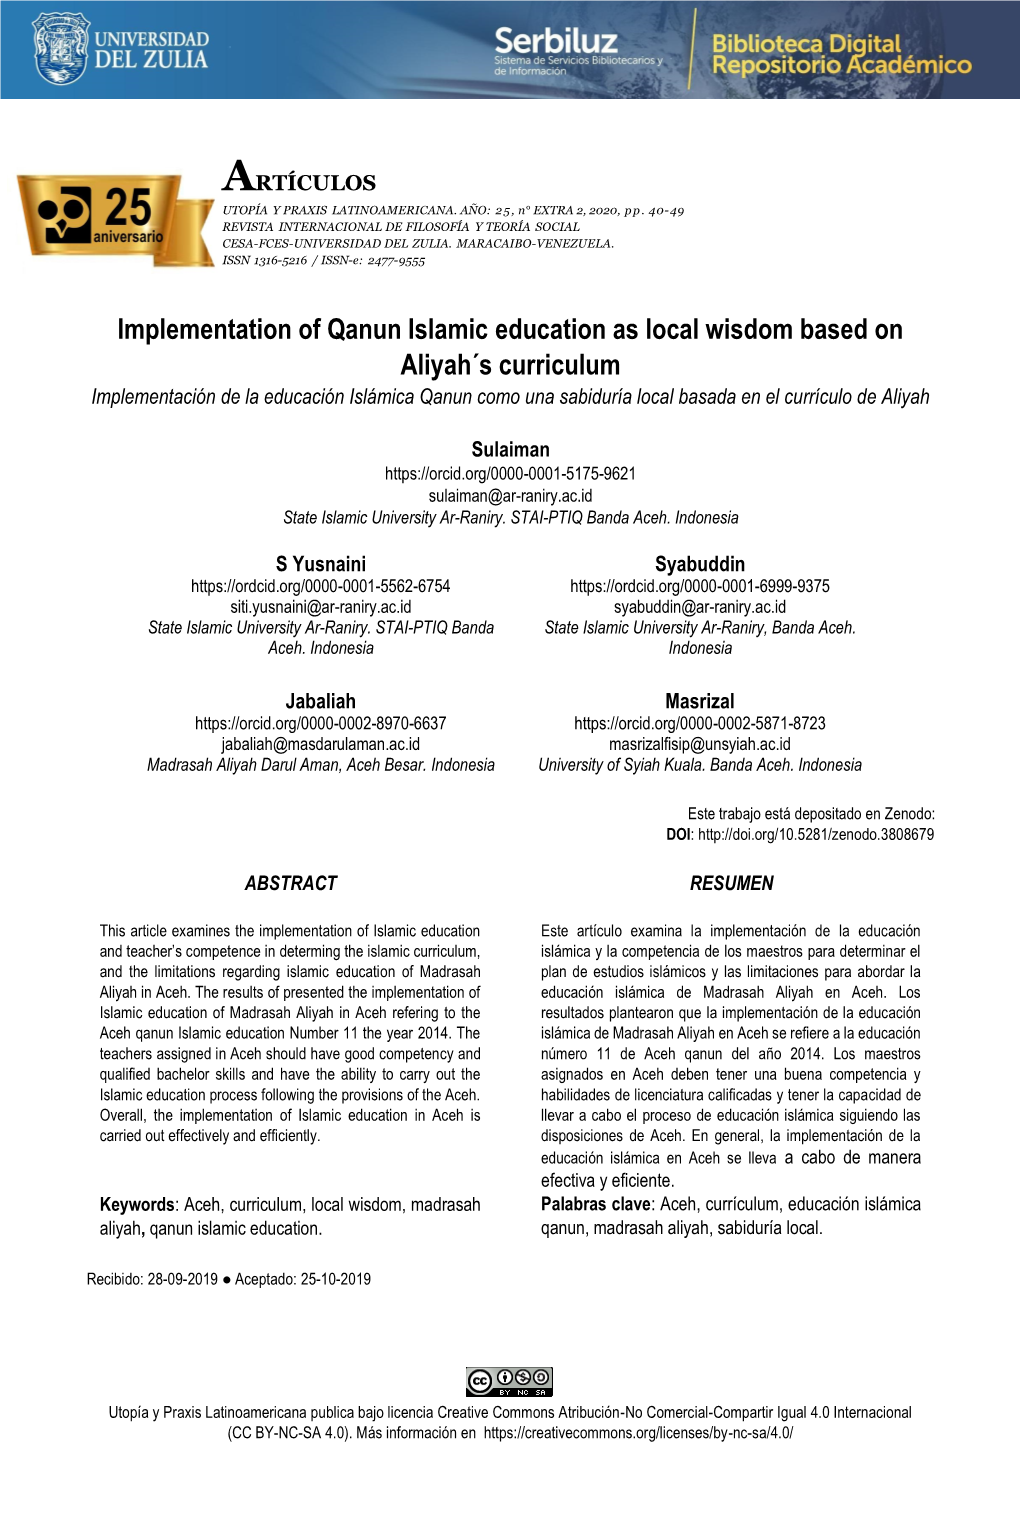 Implementation of Qanun Islamic Education As Local Wisdom